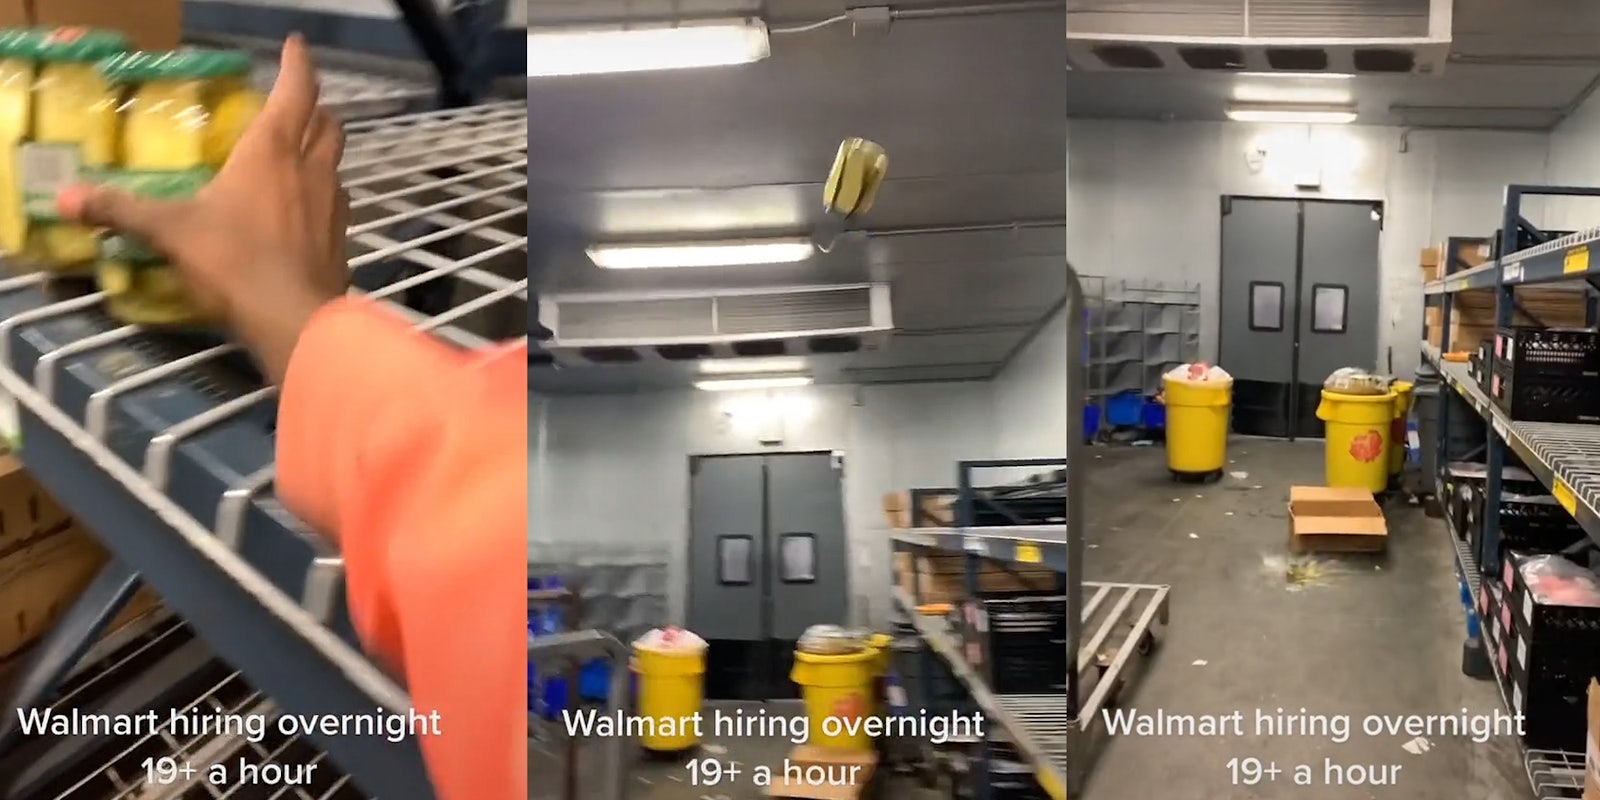 Walmart worker grabbing pickle jar in motion caption 'Walmart hiring overnight 19+ a hour' (l) pickle jar in air at Walmart back room caption 'Walmart hiring overnight 19+ a hour' (c) pickle jar crashing onto floor at Walmart back room caption 'Walmart hiring overnight 19+ a hour' (r)